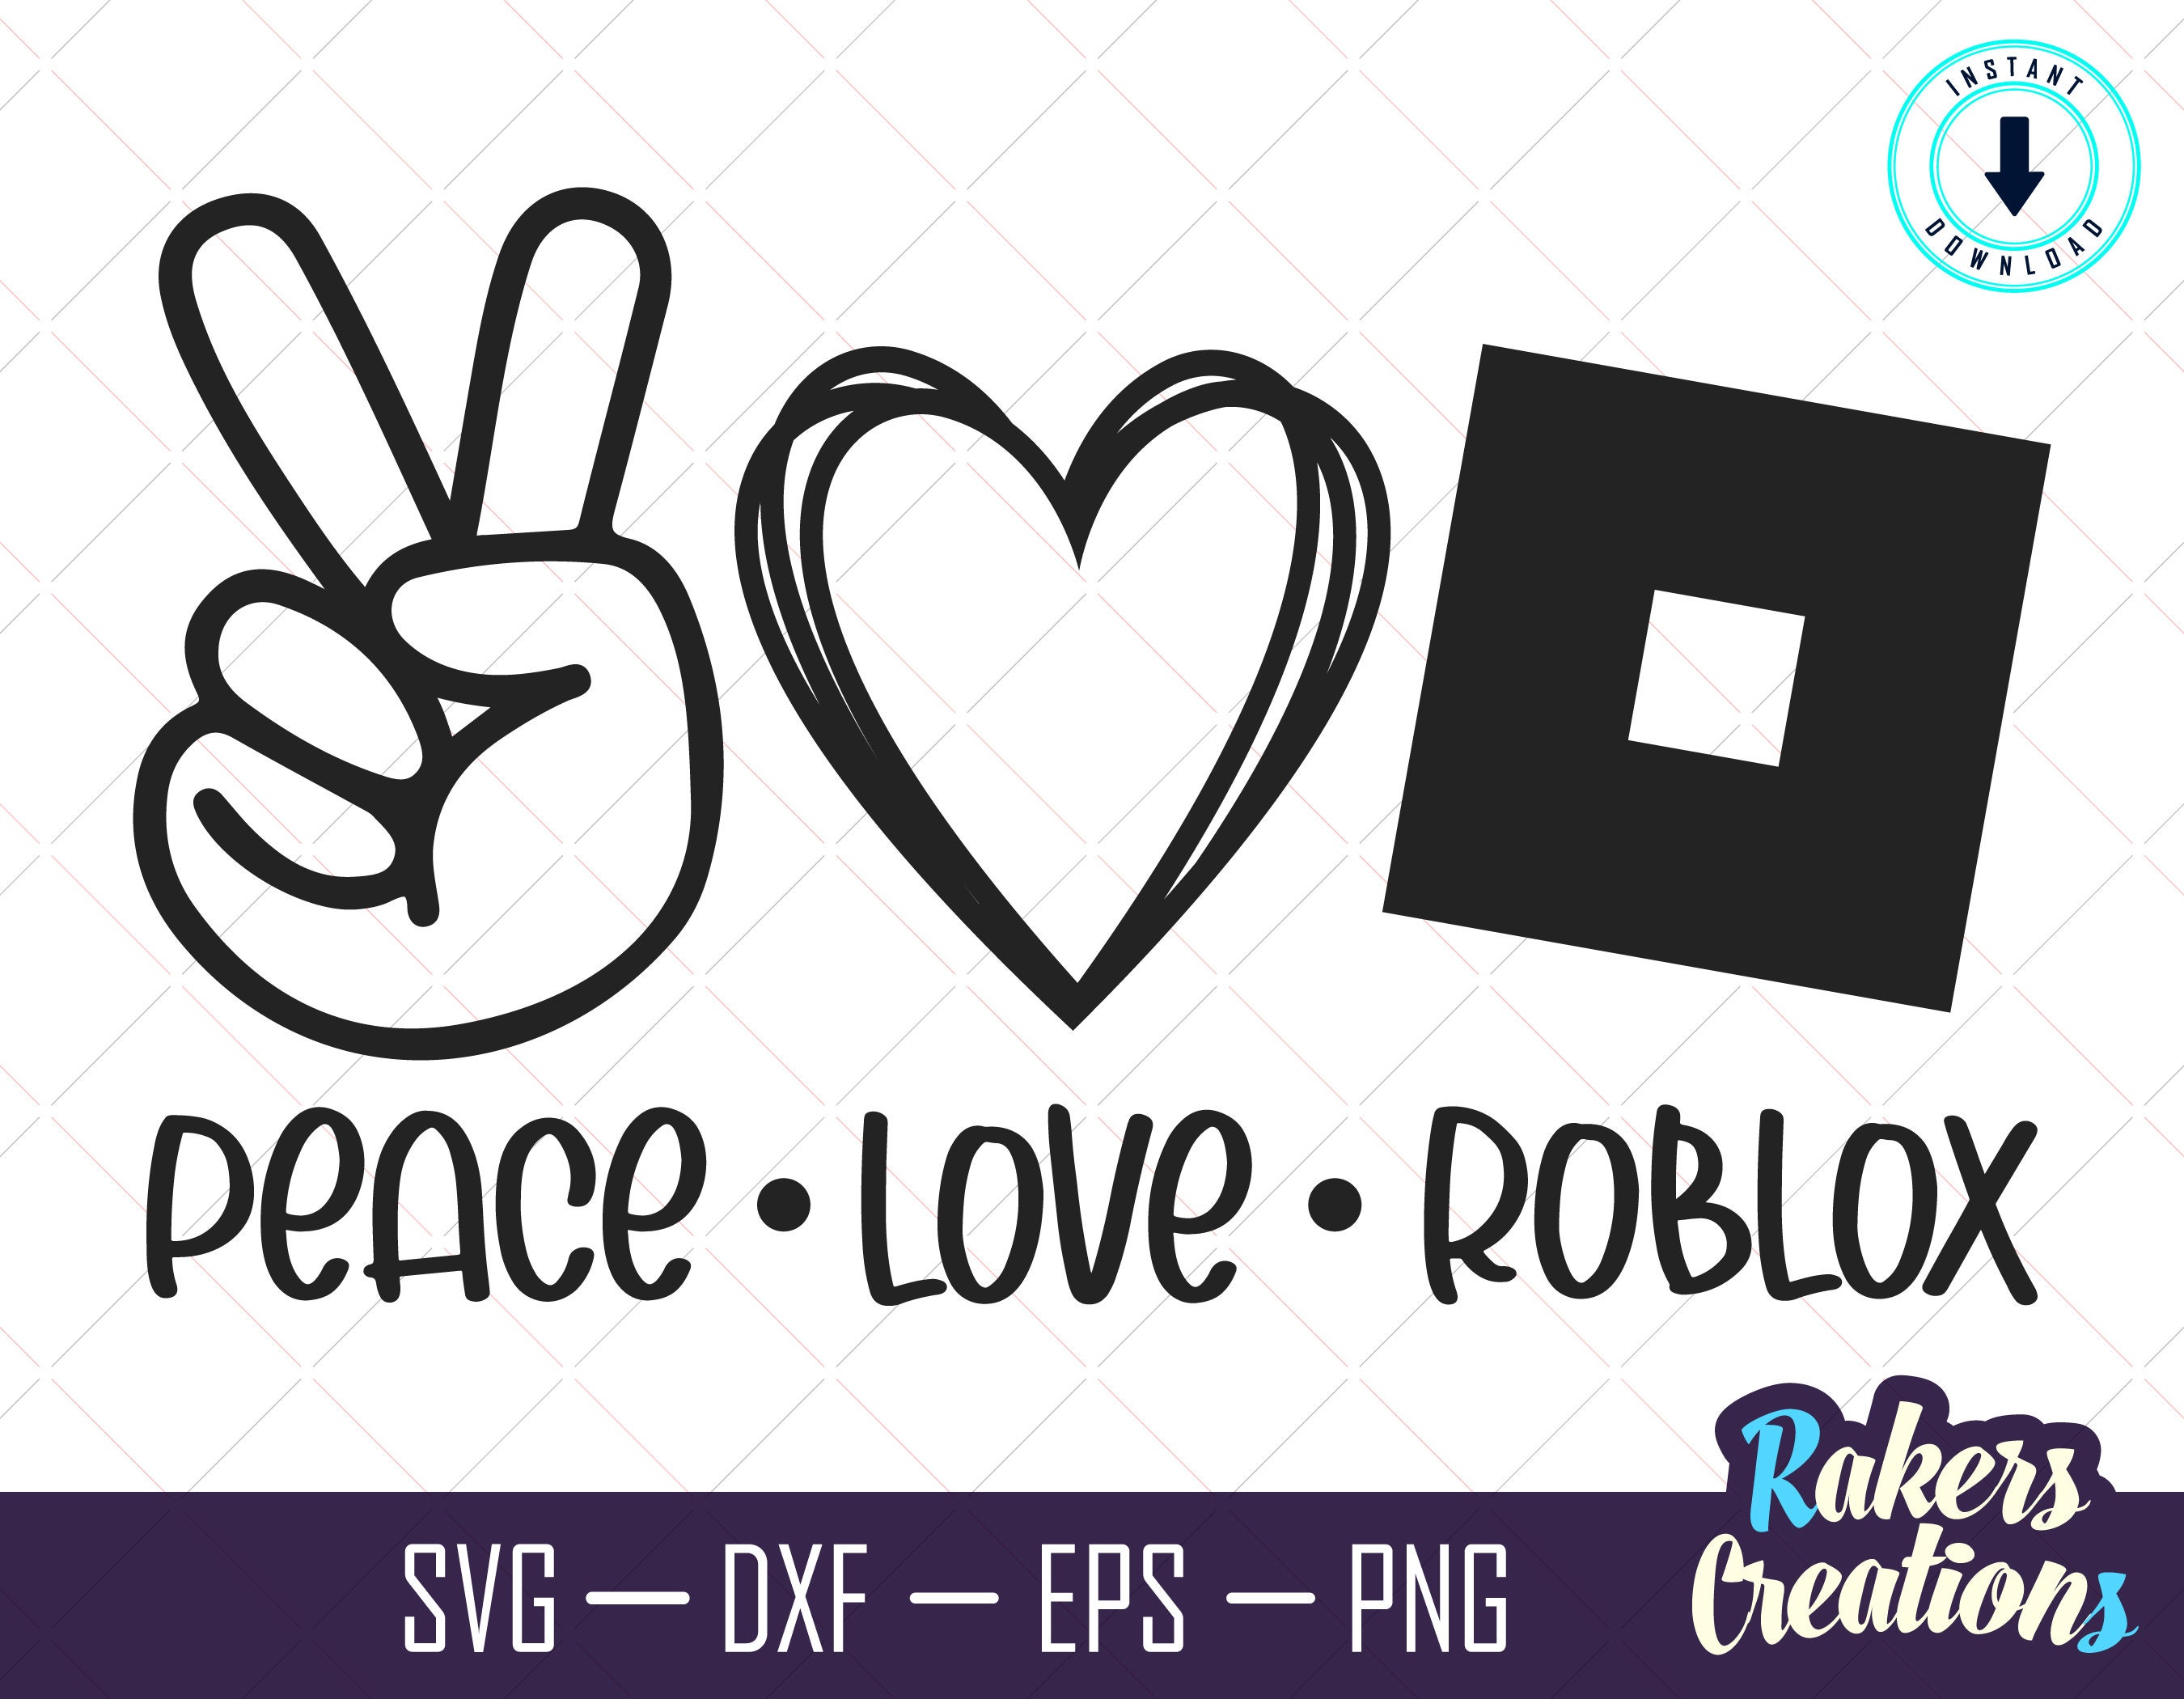 Roblox Studio Logo PNG Vector (SVG) Free Download